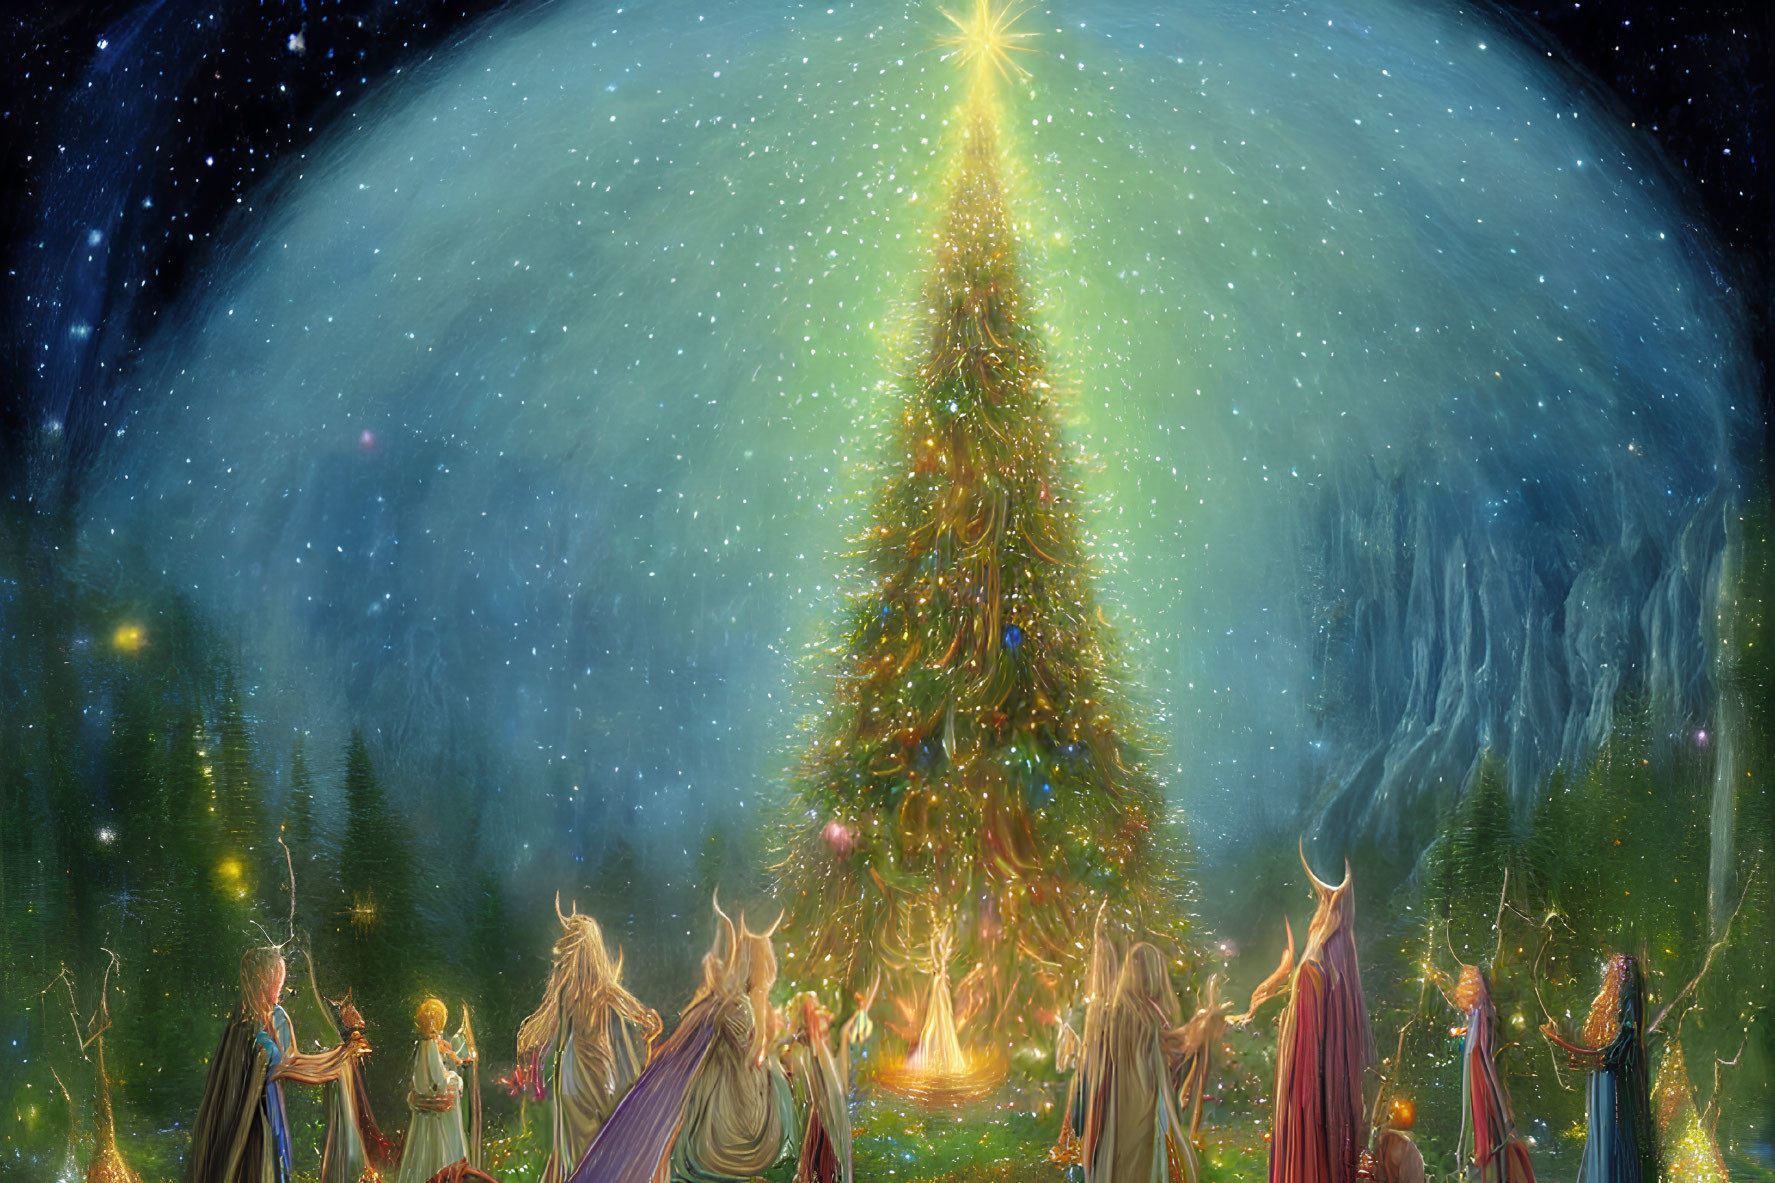 Illustration of robed figures around illuminated Christmas tree under starry sky